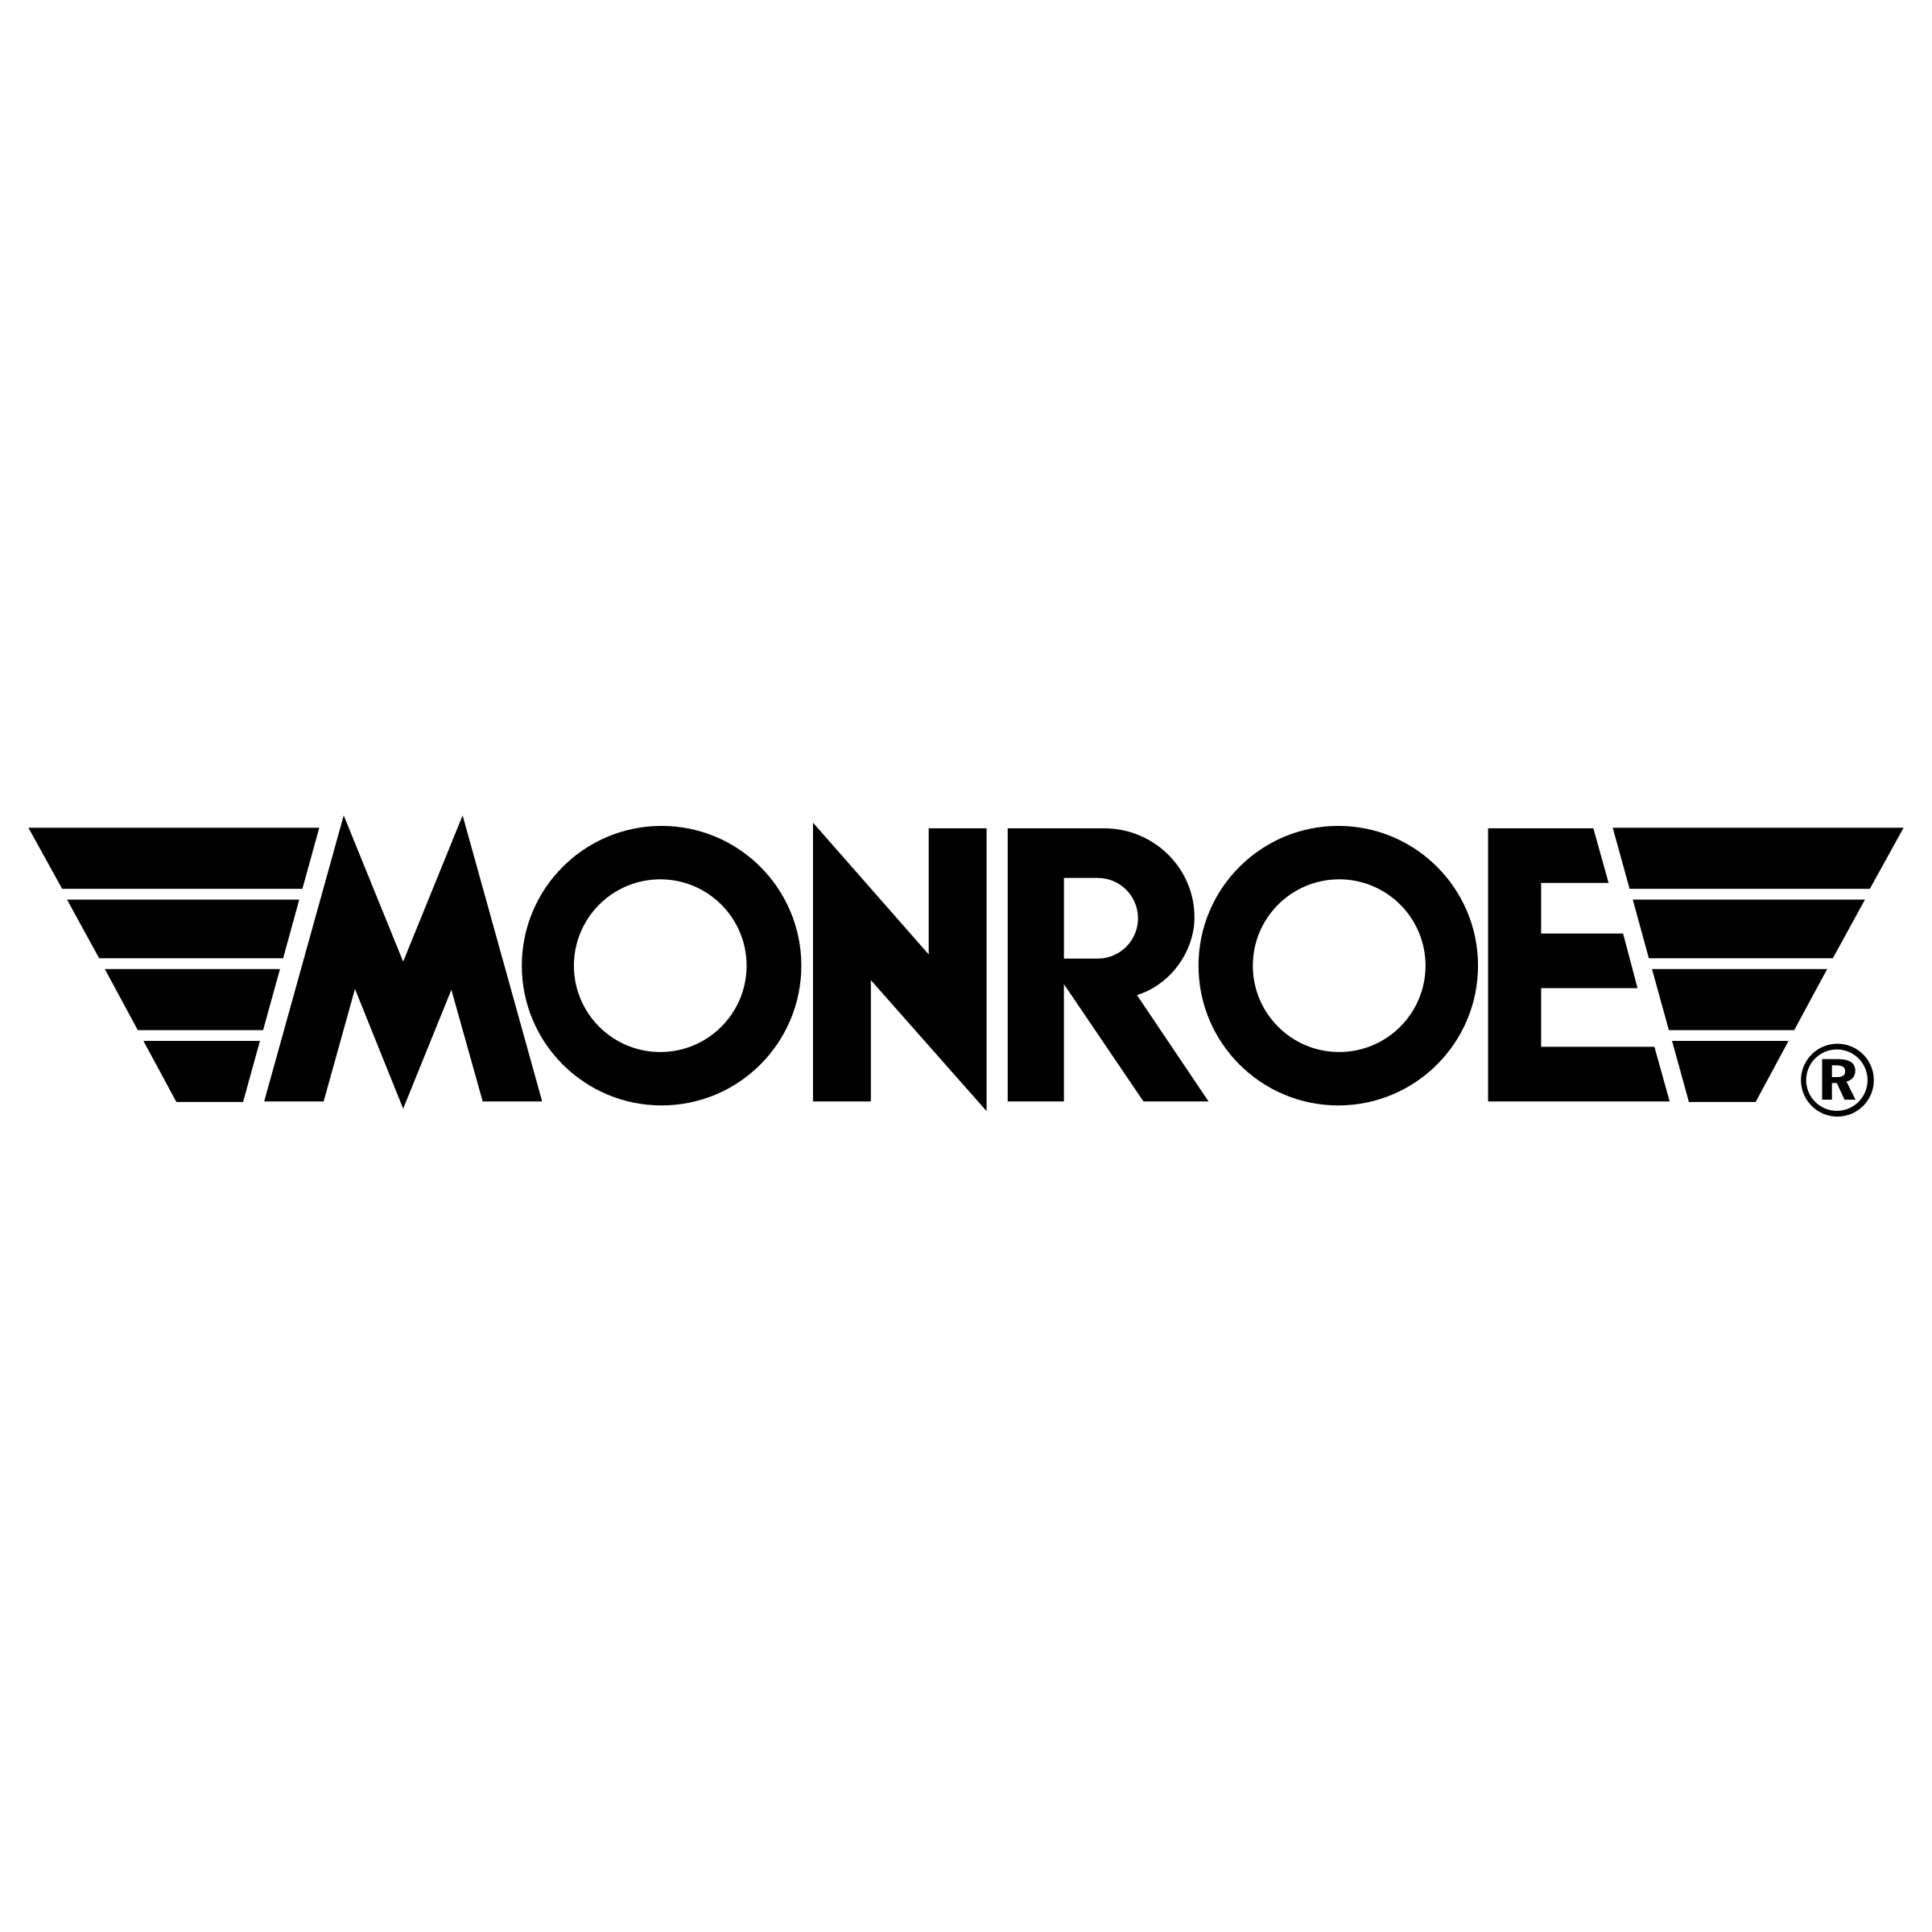 Monroe Logo - Monroe Logo PNG Transparent & SVG Vector - Freebie Supply